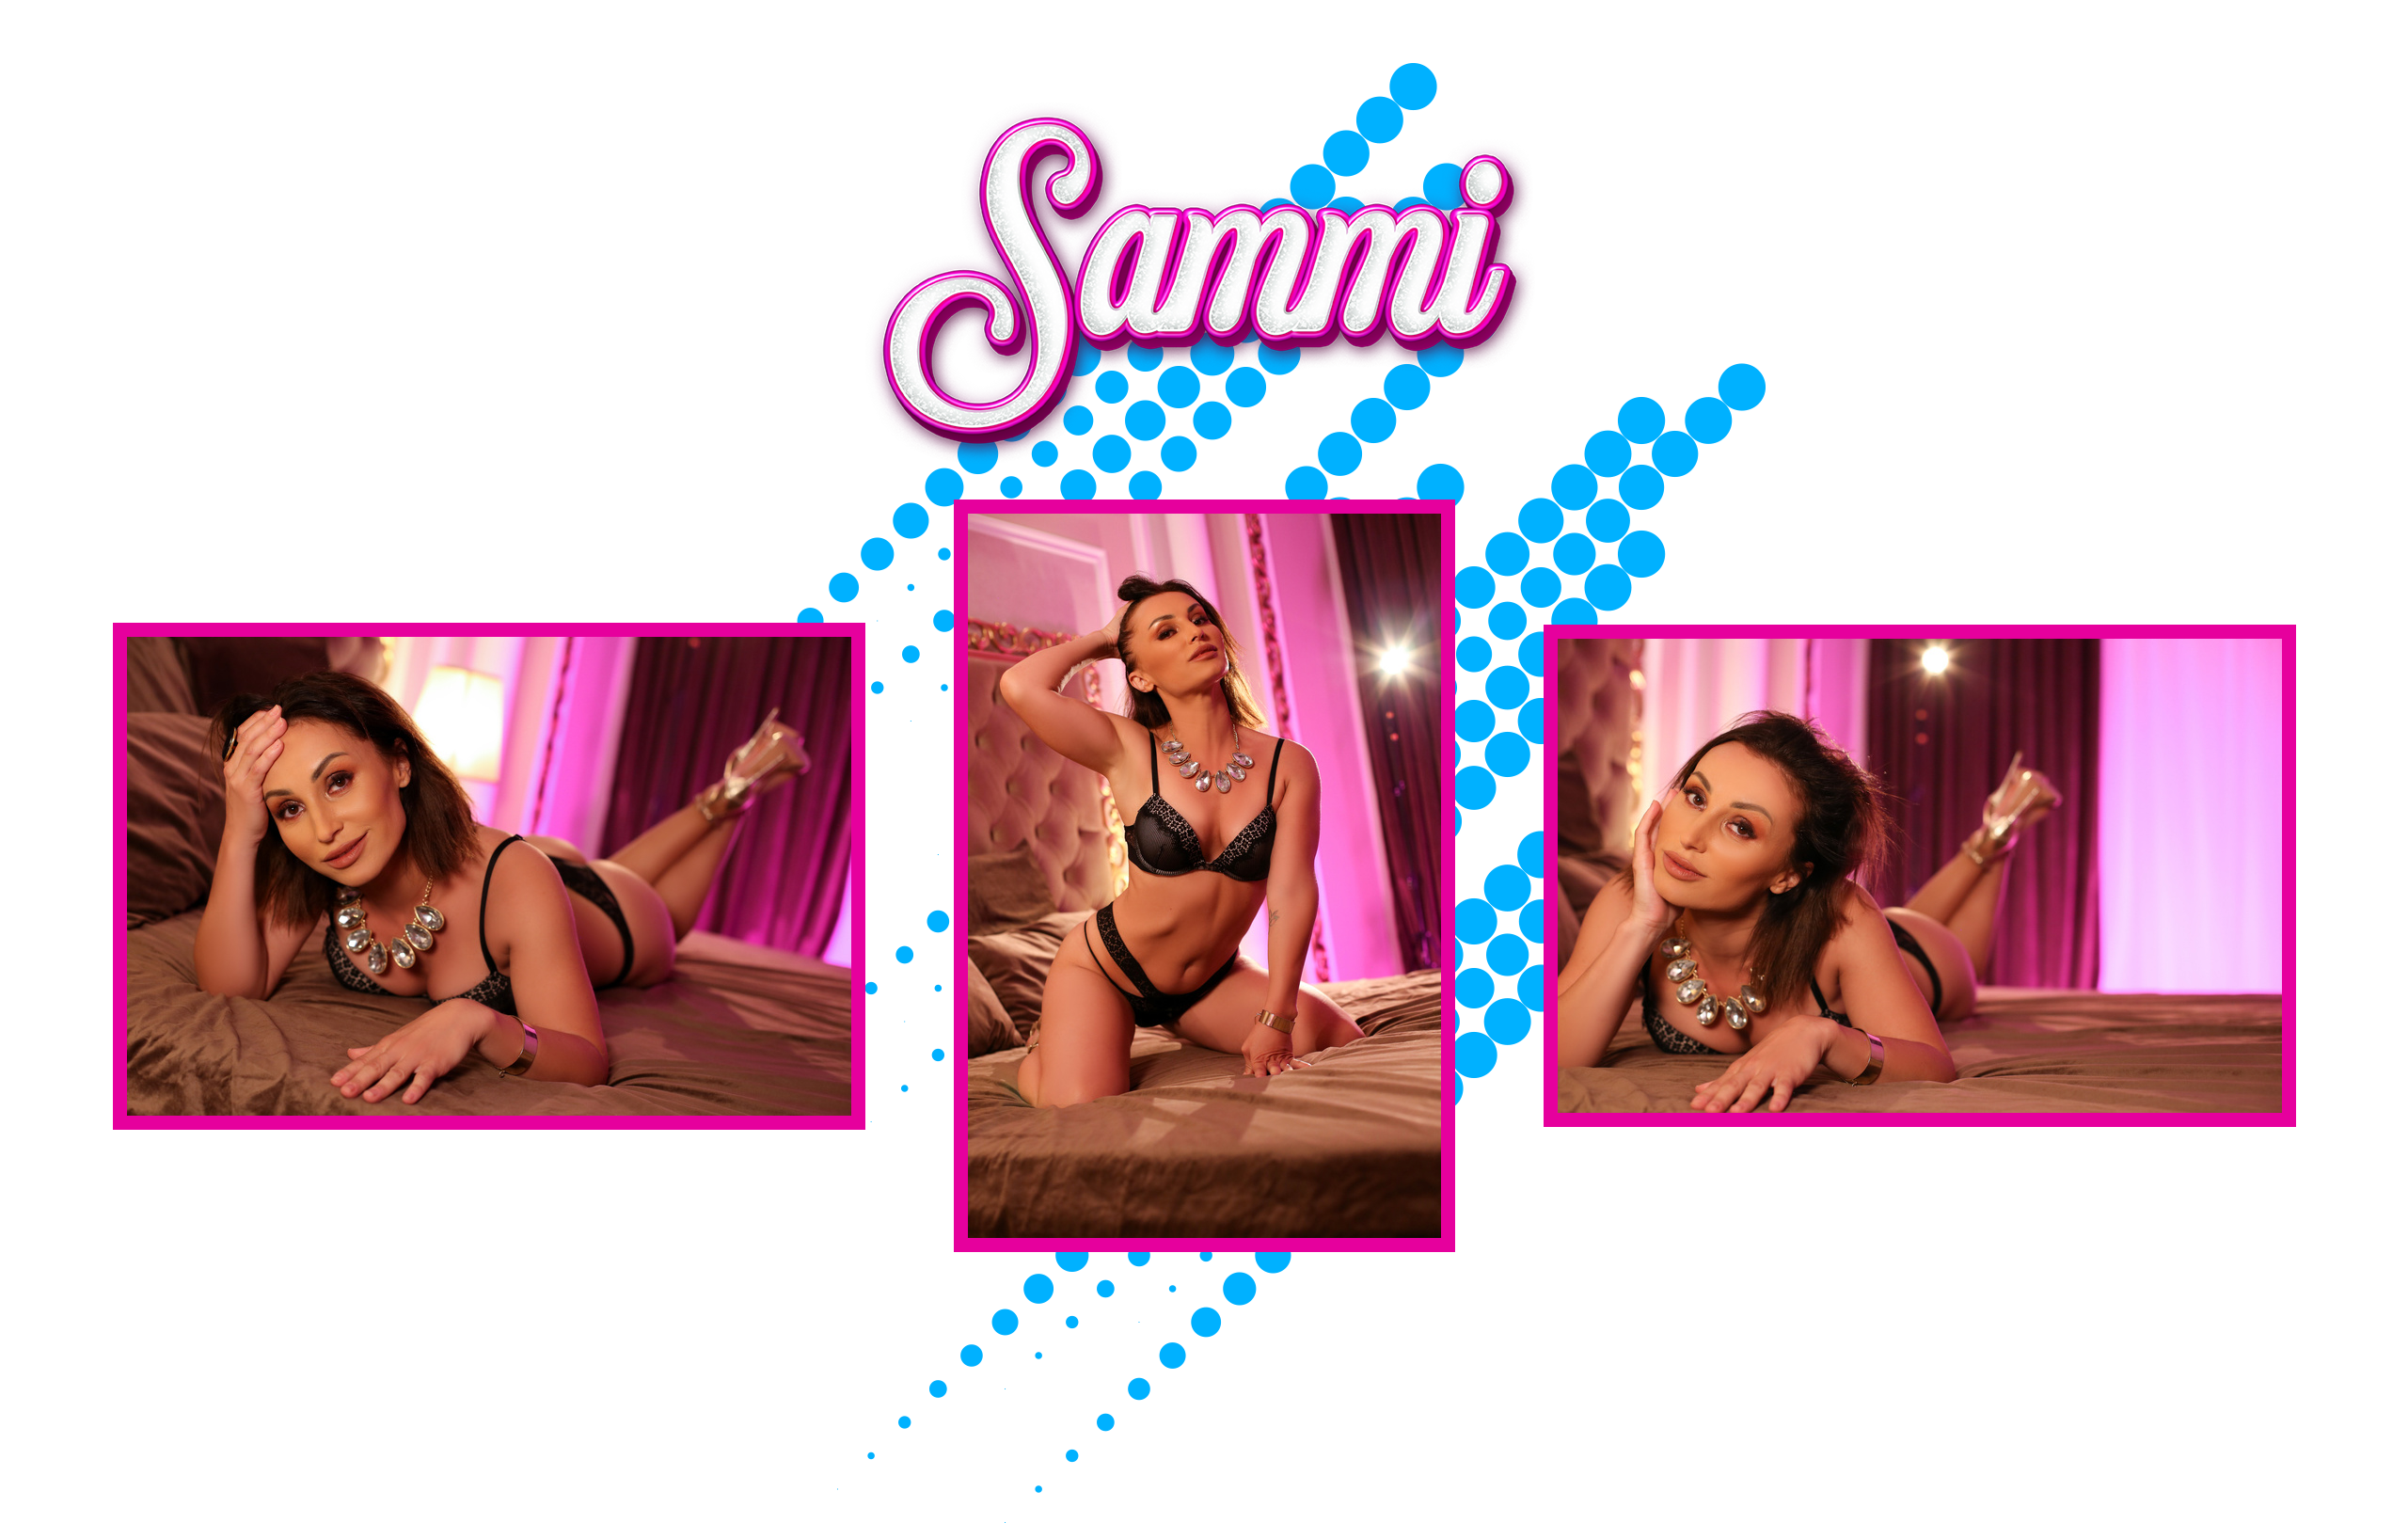 Sammirah Hello! Love me! image: 1